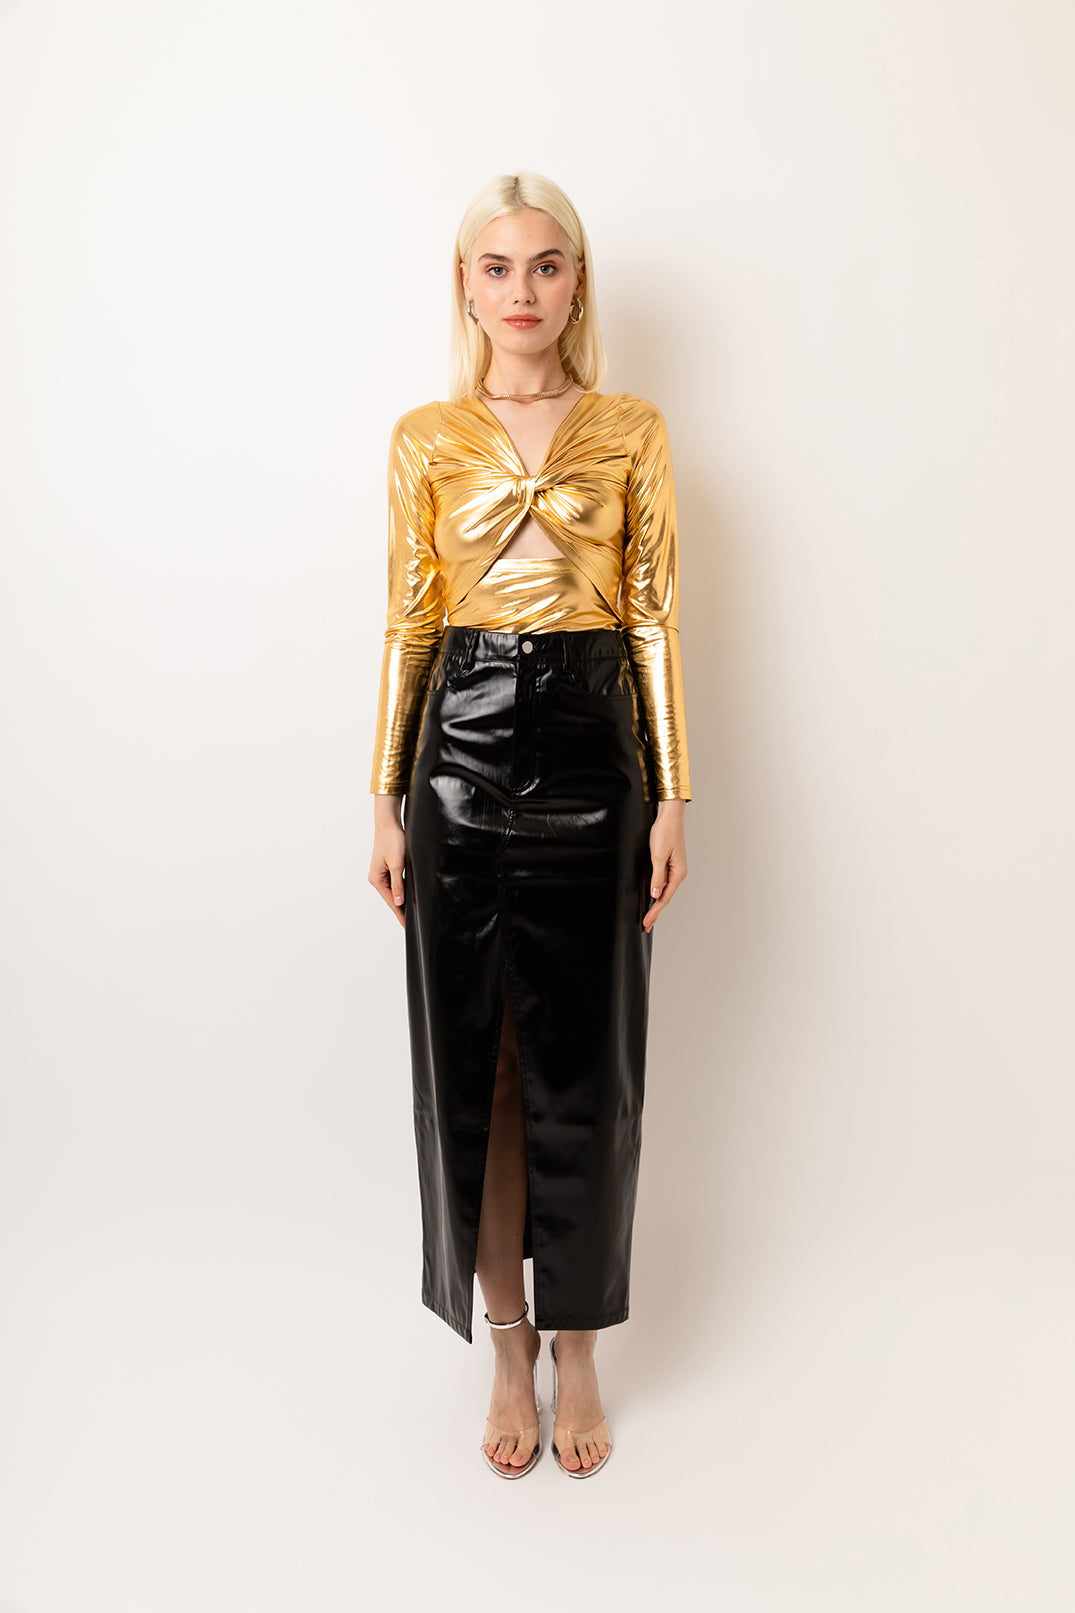 Lupe Black Metallic Maxi Skirt - The perfect wardrobe staple | AmyLynn